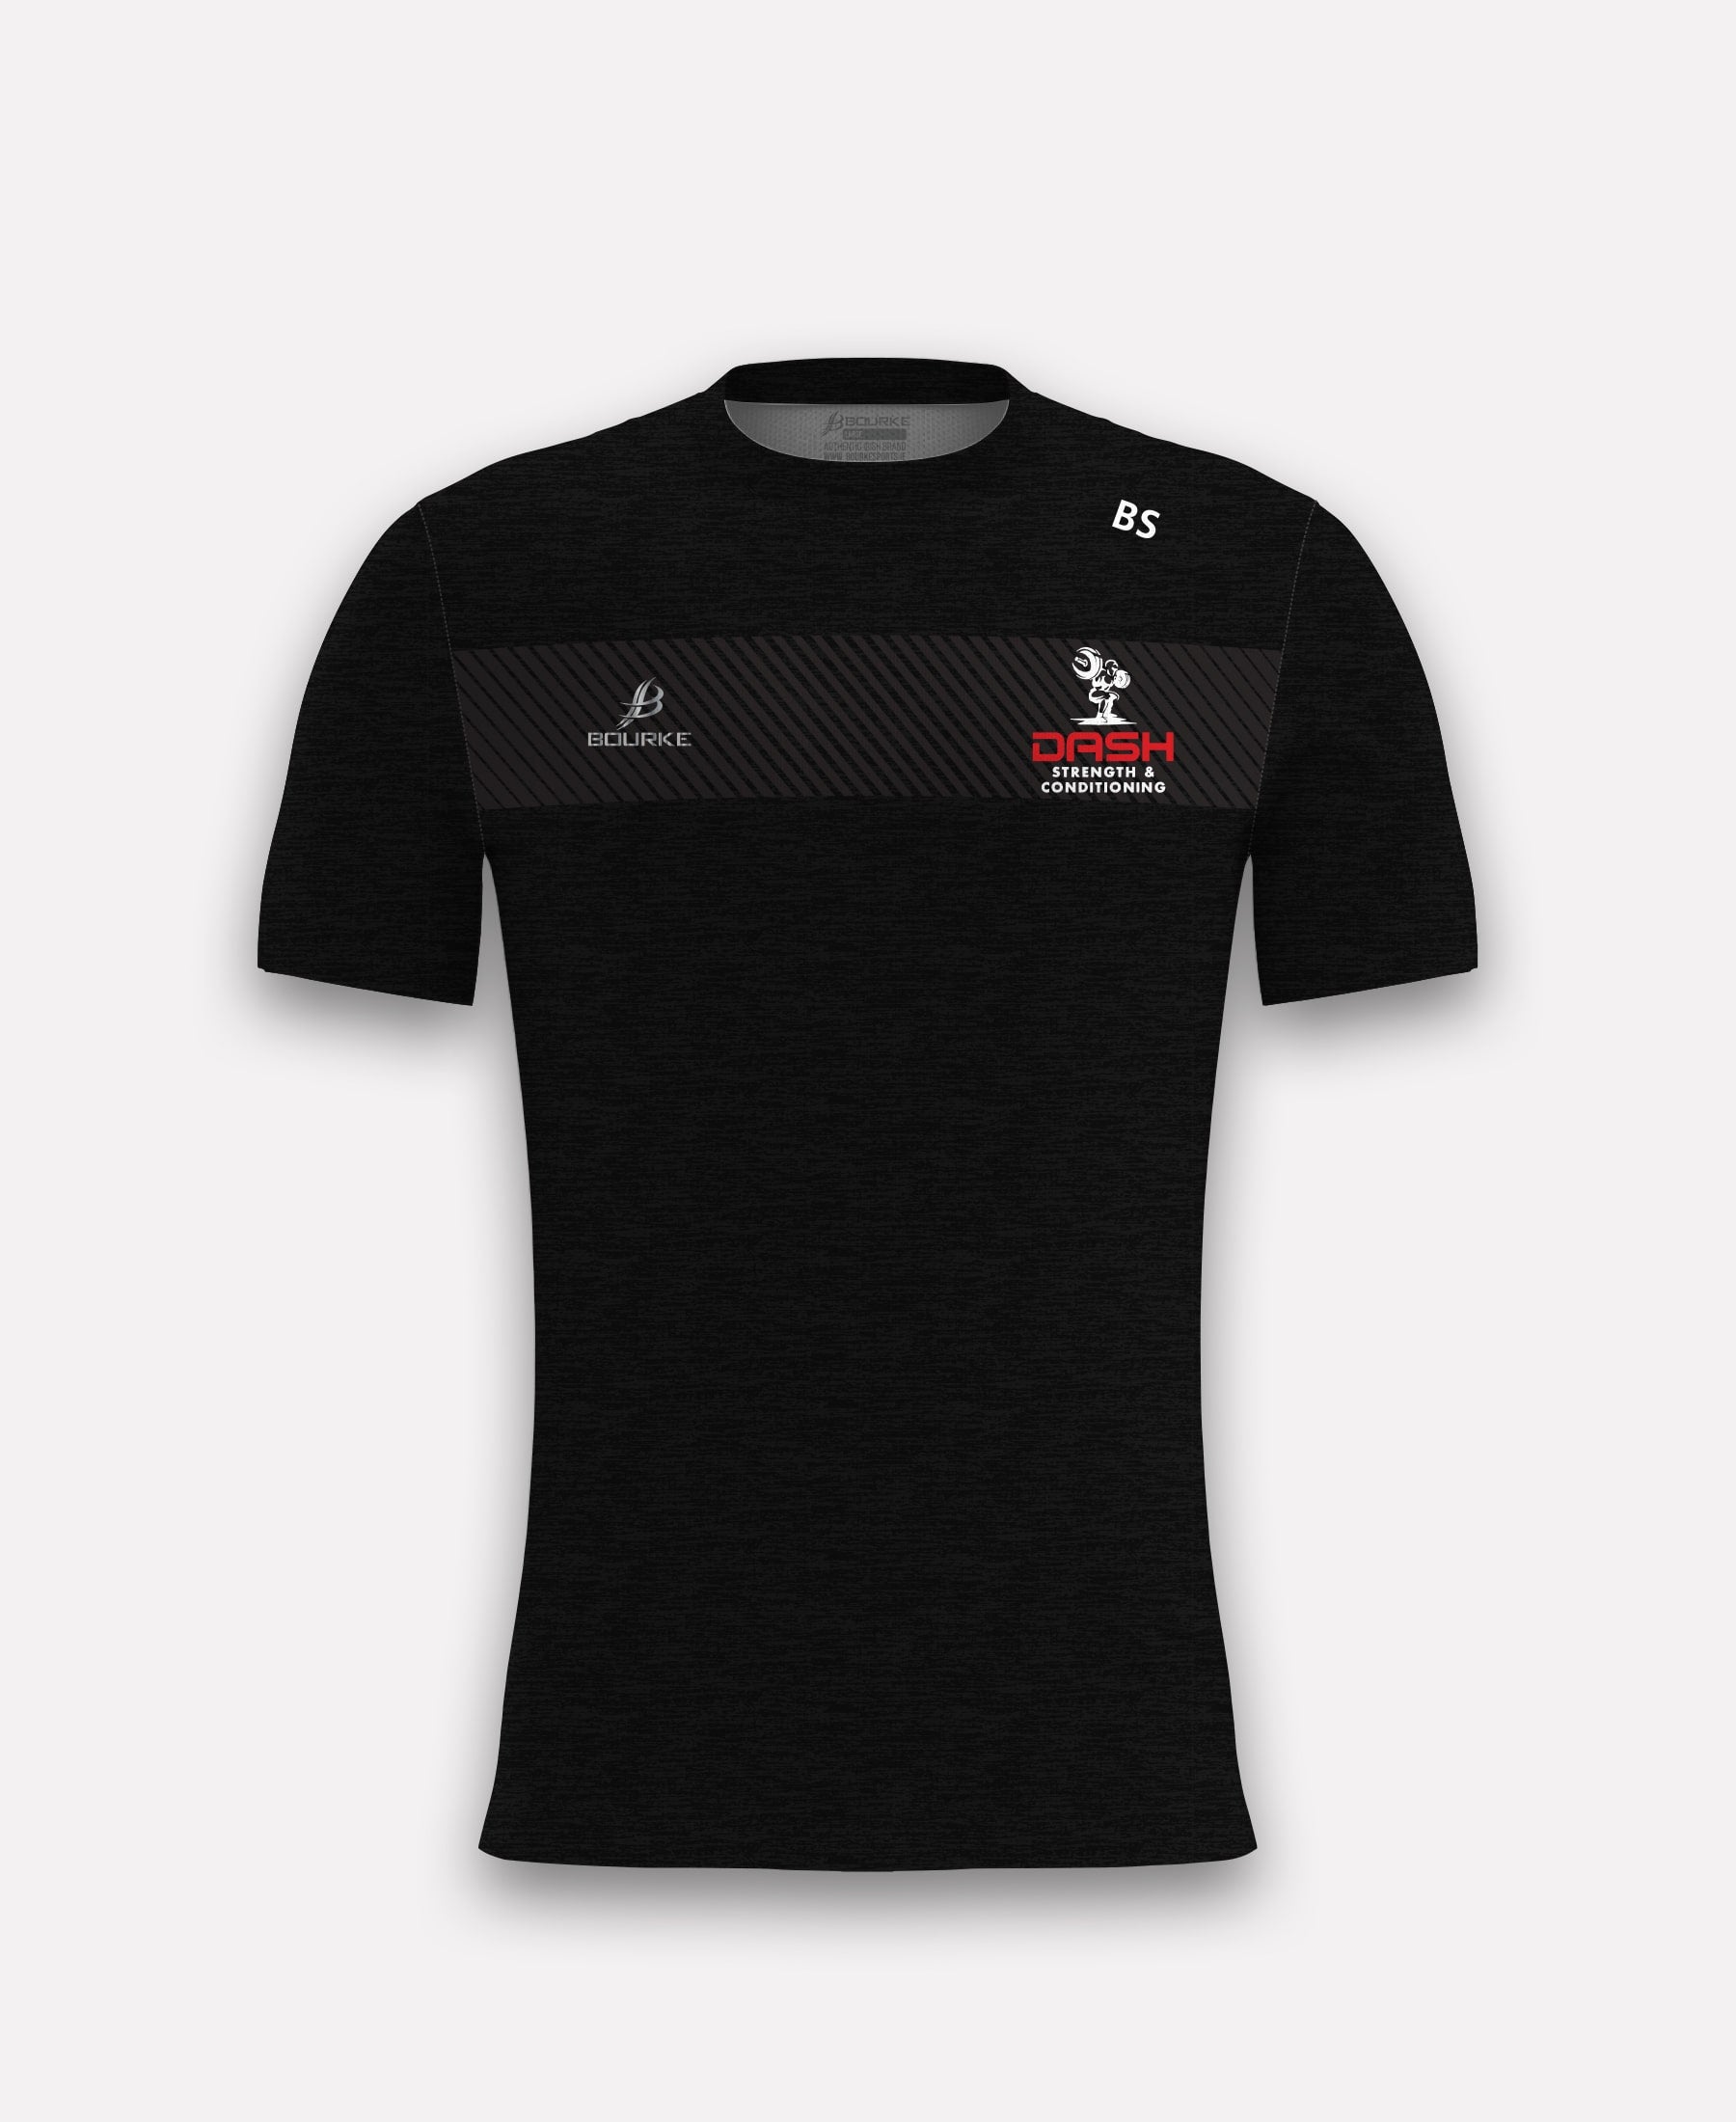 DASH Strength & Conditioning TACA T-Shirt (Black)